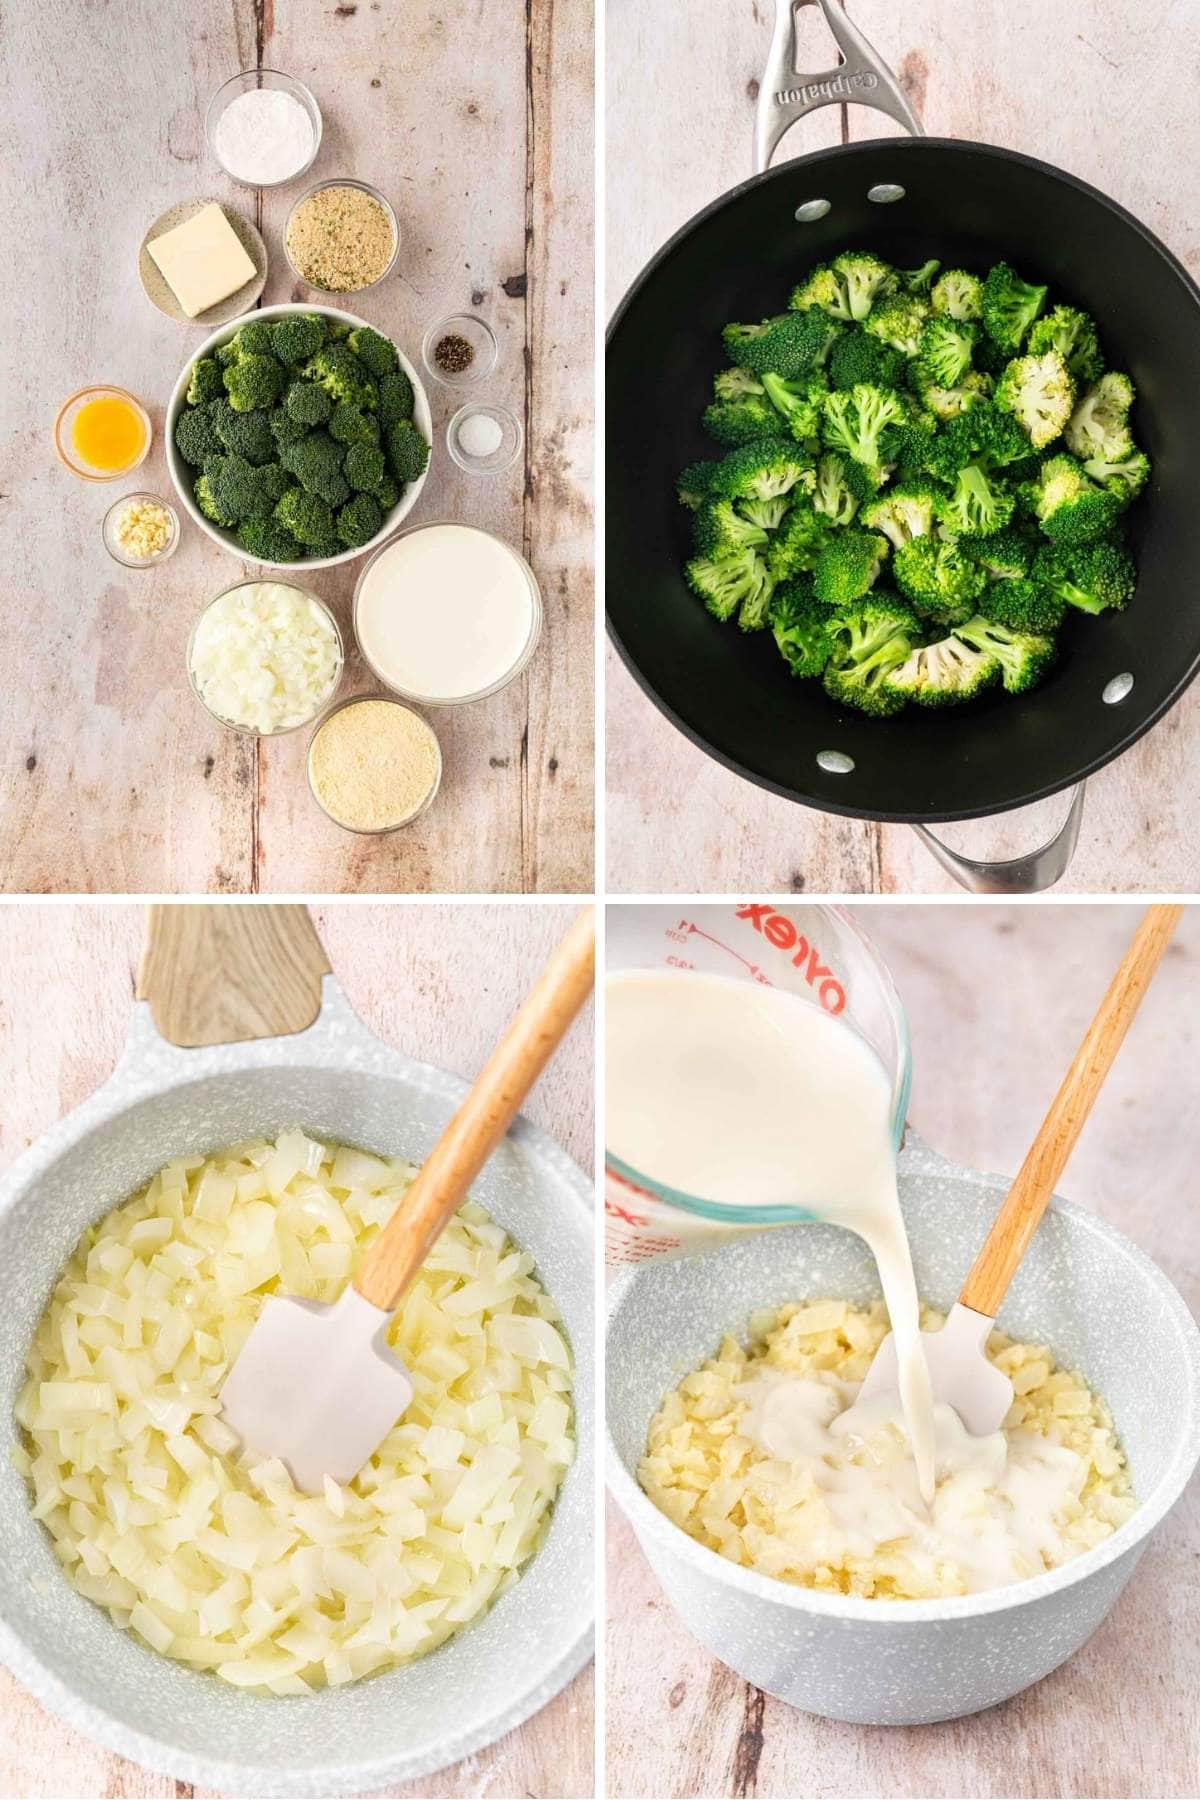 Baked Parmesan Broccoli Casserole collage